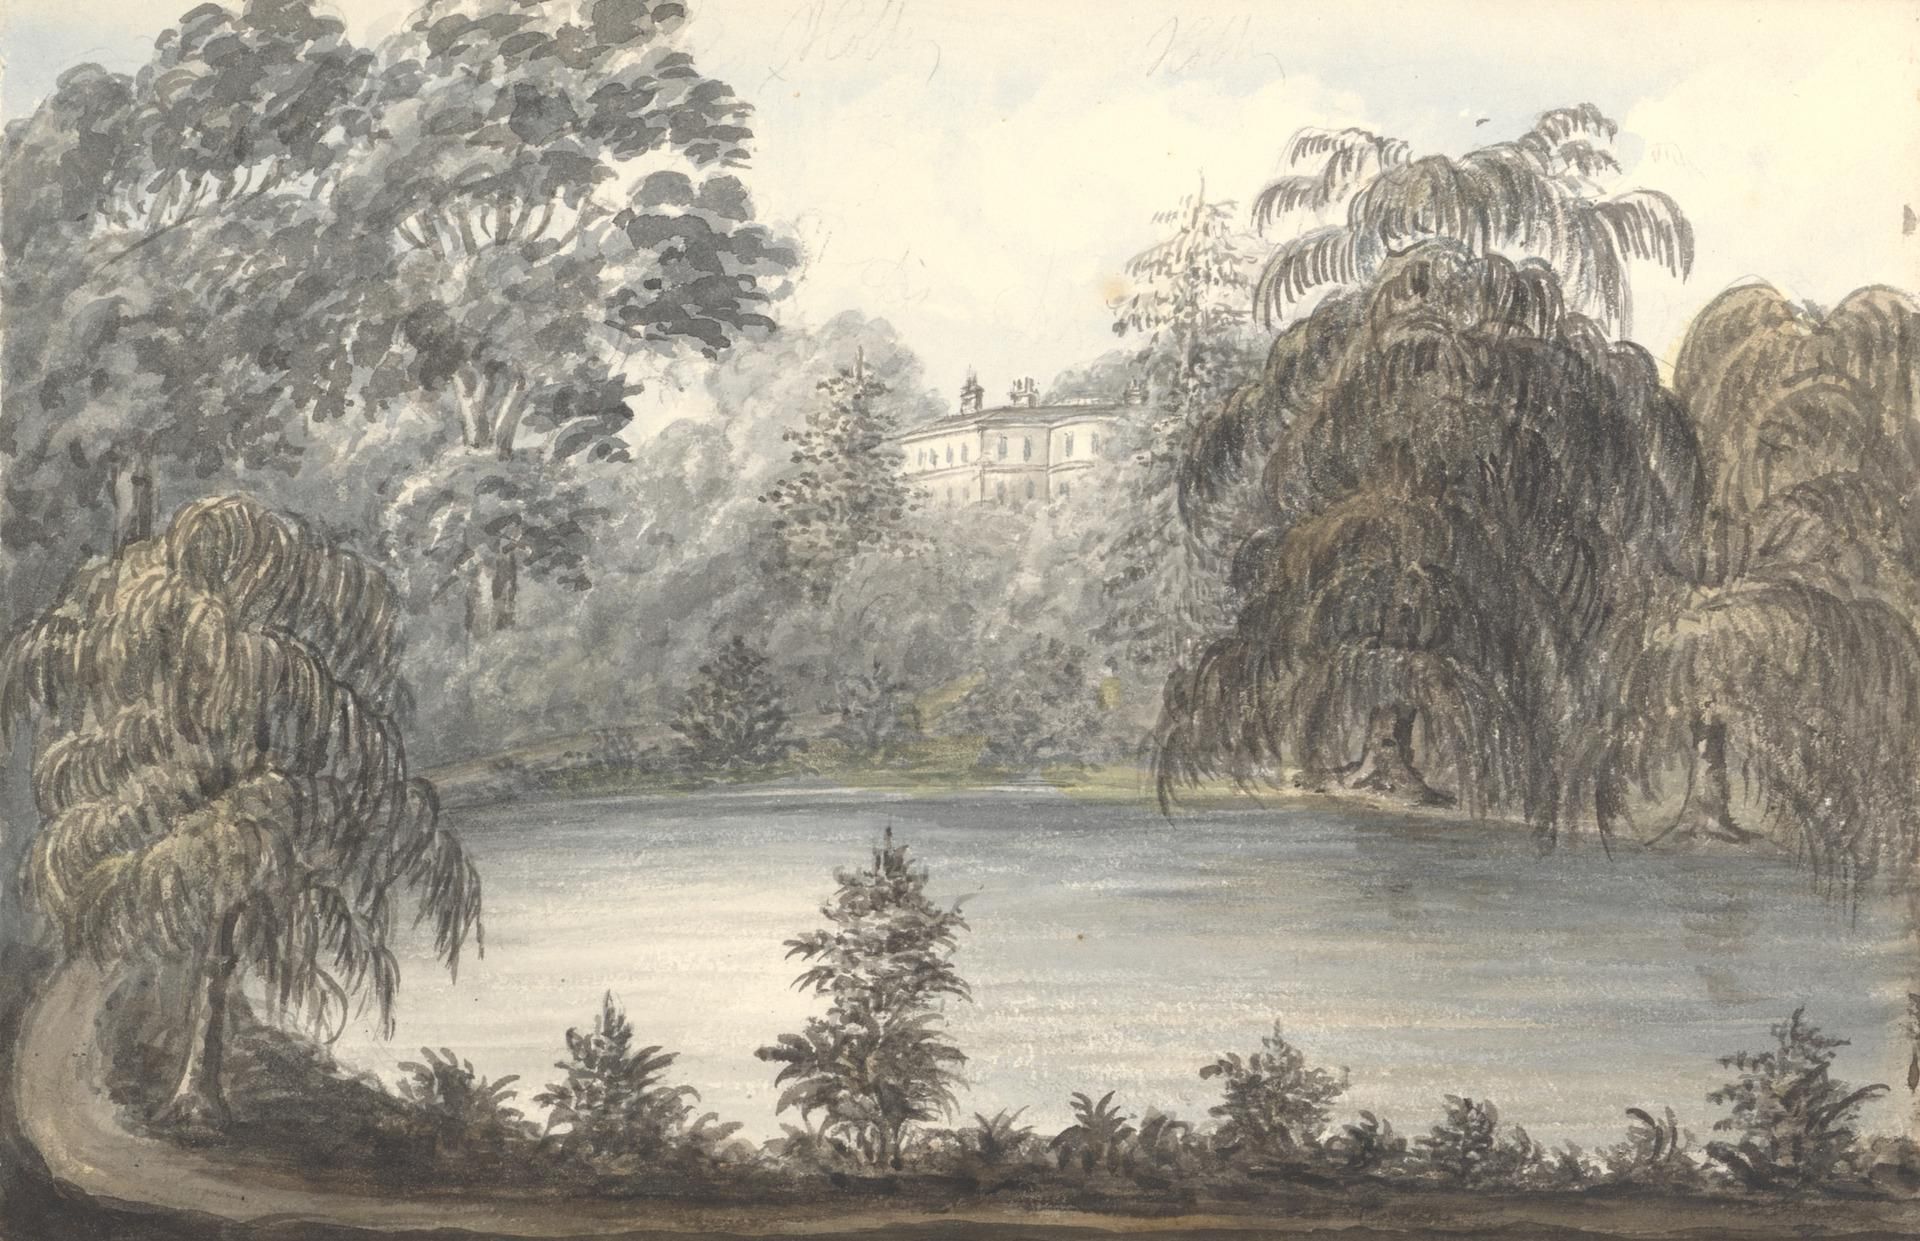 October 10, 1832, Wanstead House